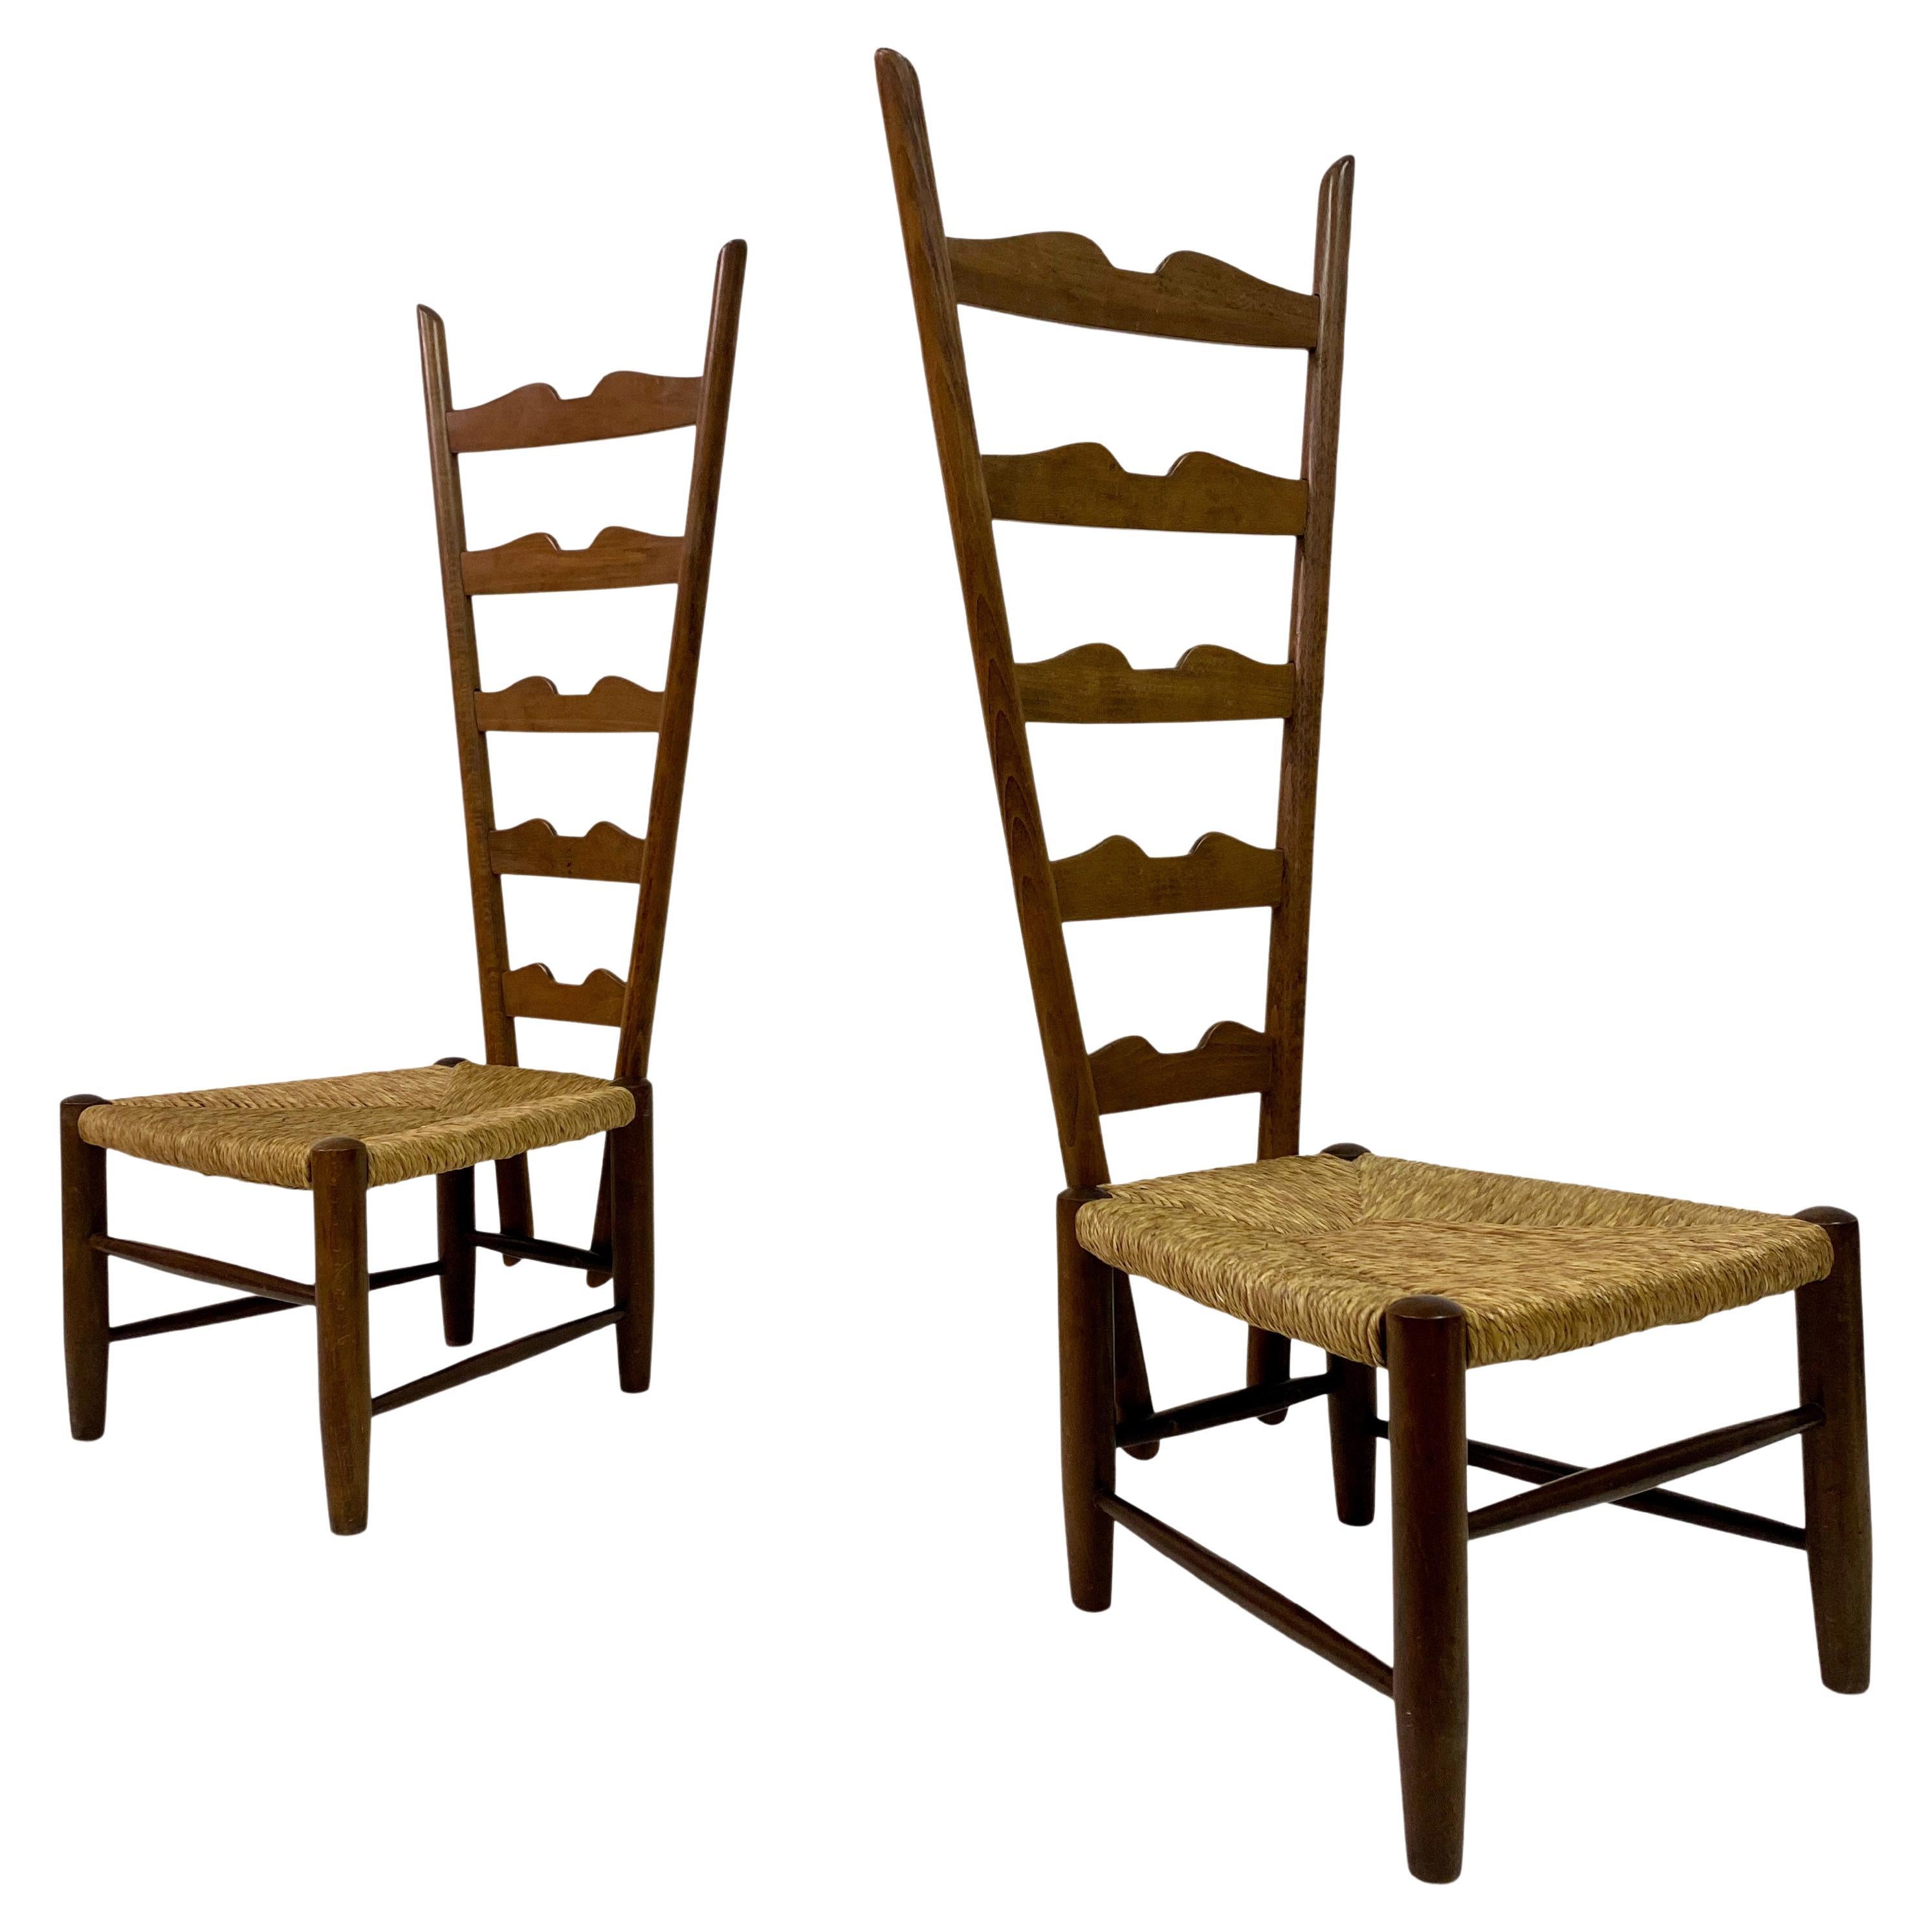 Pair Of Fireside Chairs By Gio Ponti For Casa E Giardino